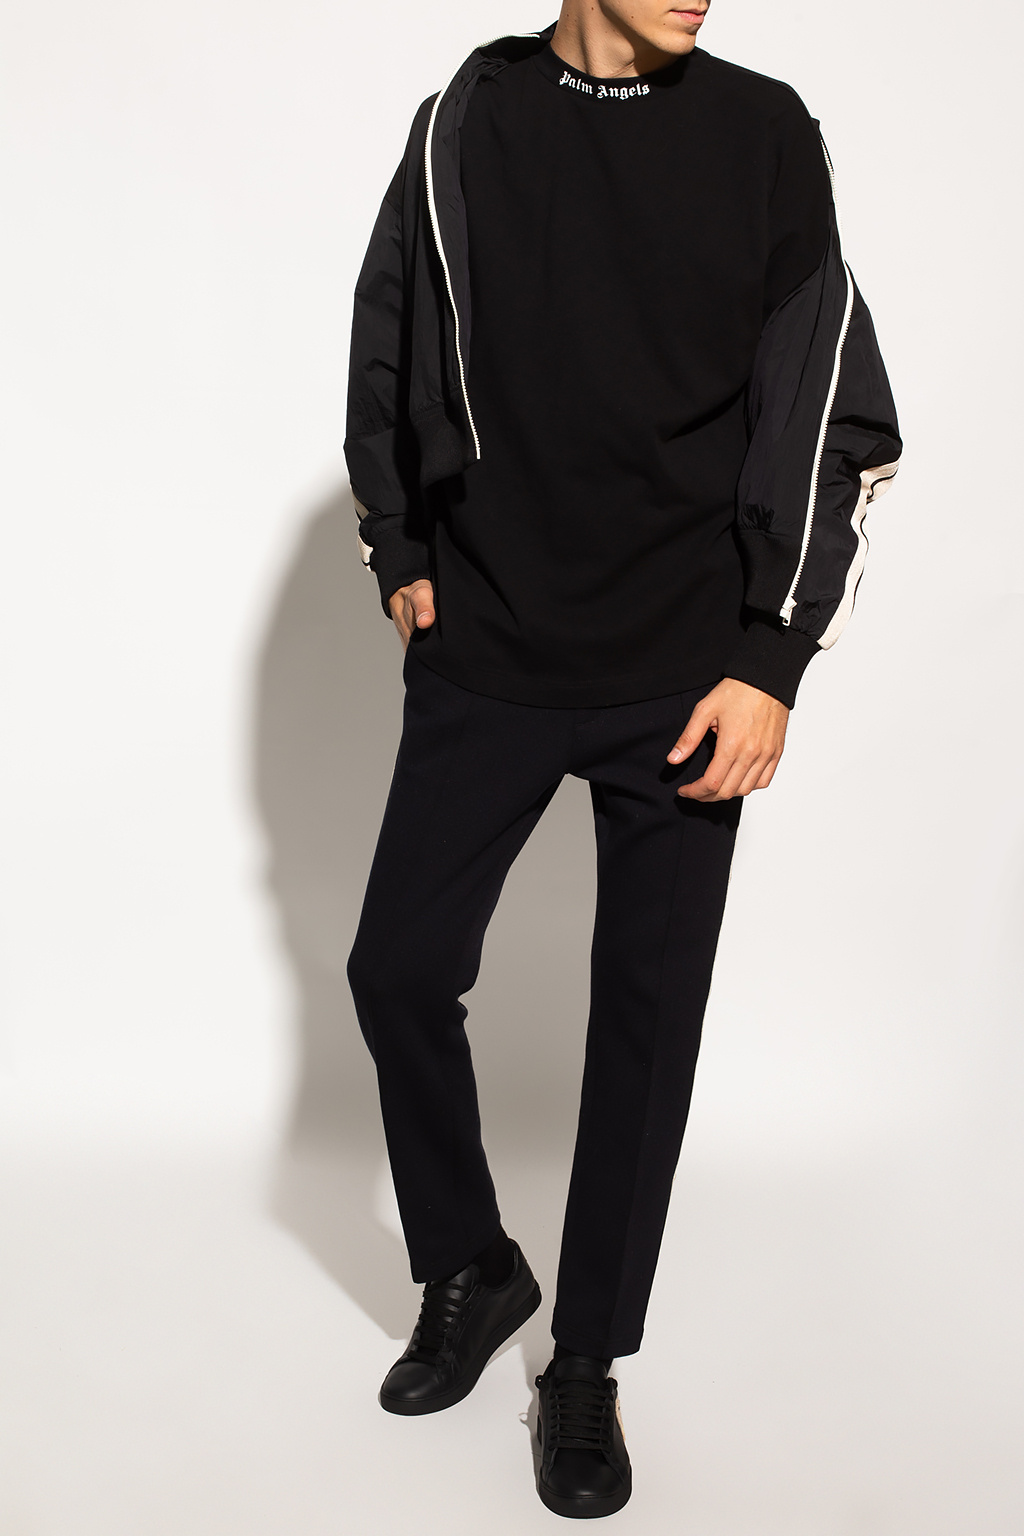 Palm Angels Nylon track jacket | Men's Clothing | Vitkac